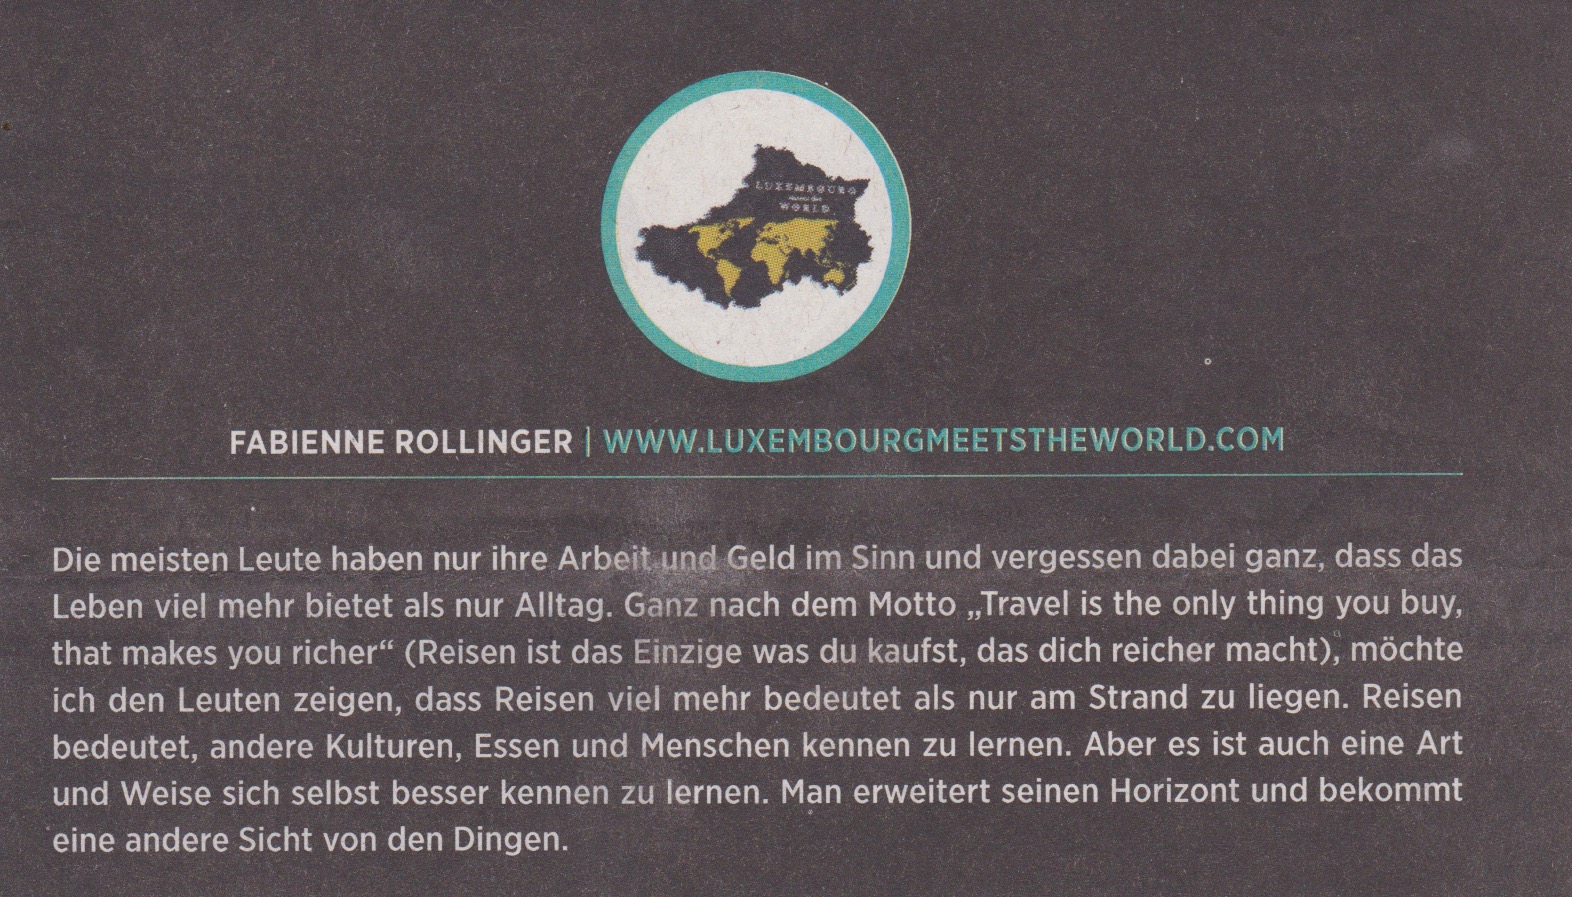 Lëtzebuerger Journal - Luxembourg meets the World